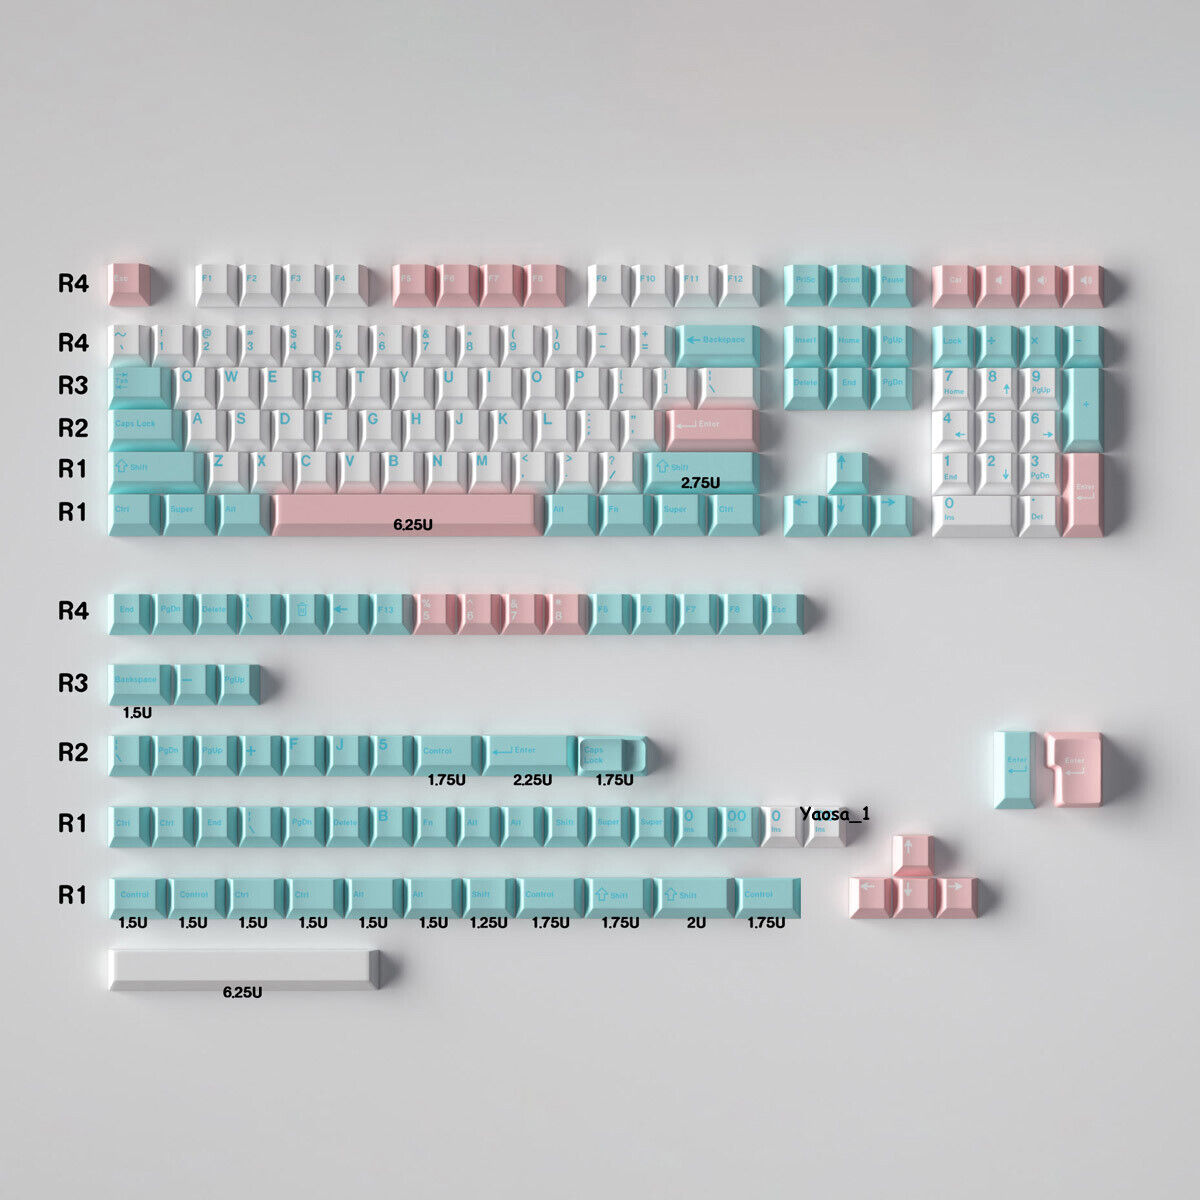 GMK Copy Astringent Pink/Blue/White Keycap Cherry Profile PBT 171PCS/Set